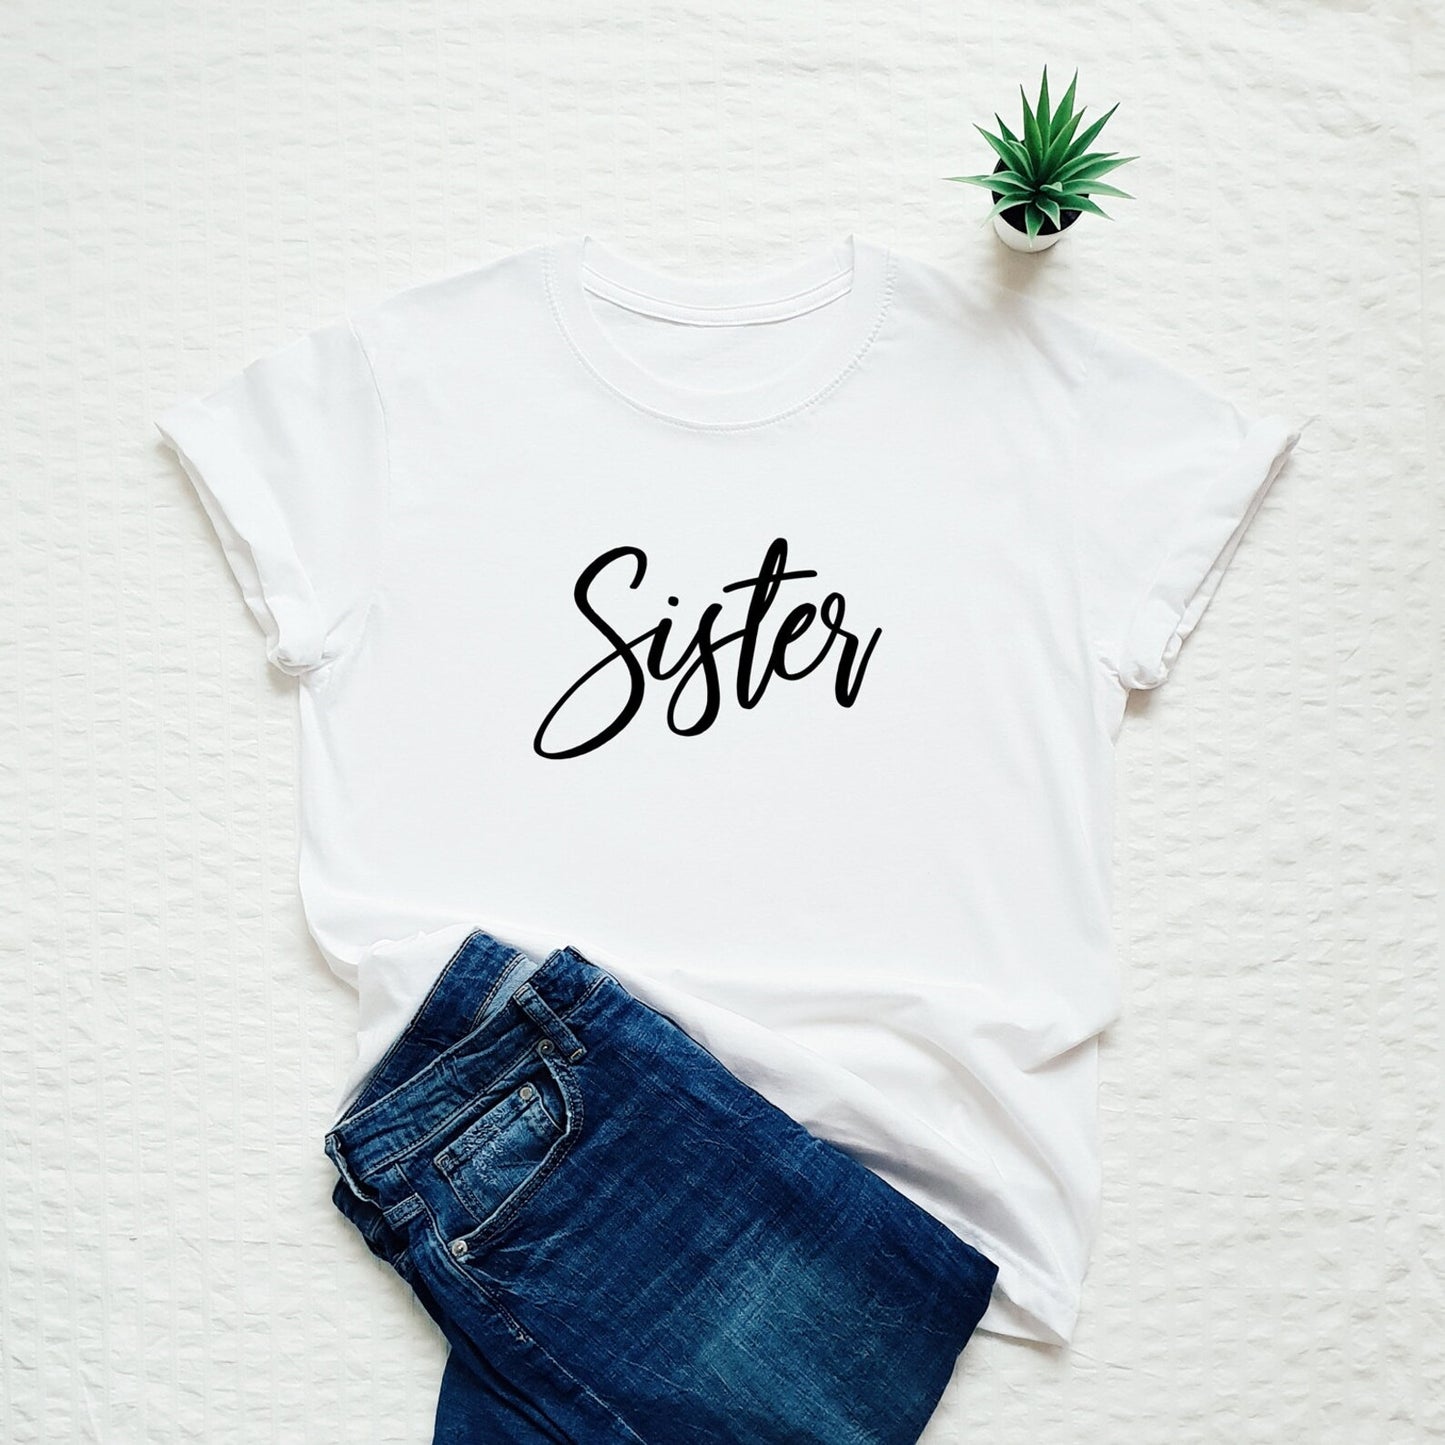 Sister Printed White T-Shirt